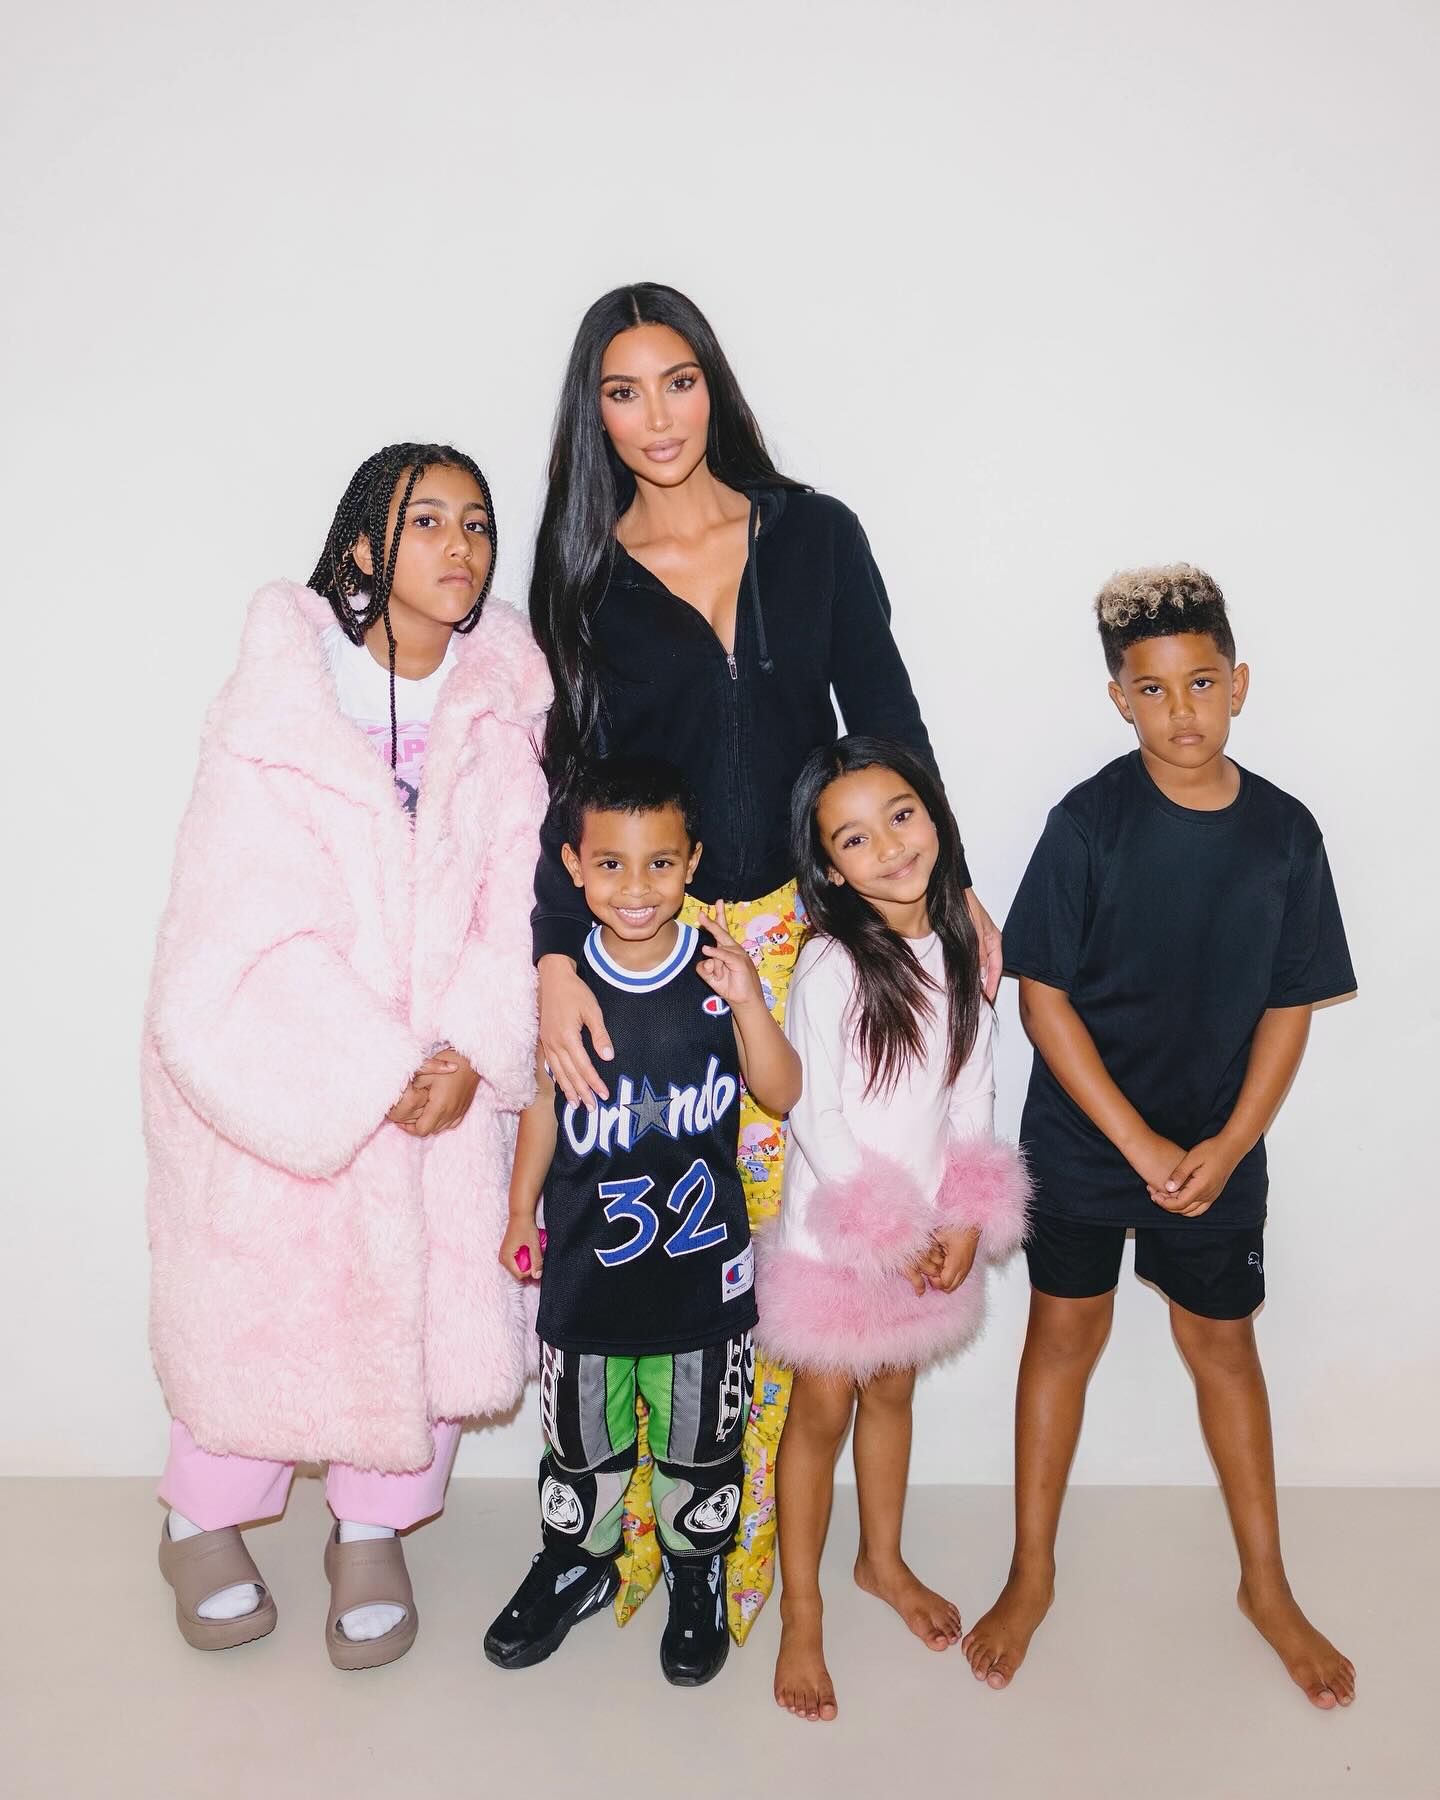 Kanye West: Ζητά από την Kim Kardashian να βγάλει τα παιδιά τους από το «ψεύτικο» σχολείο για celebs